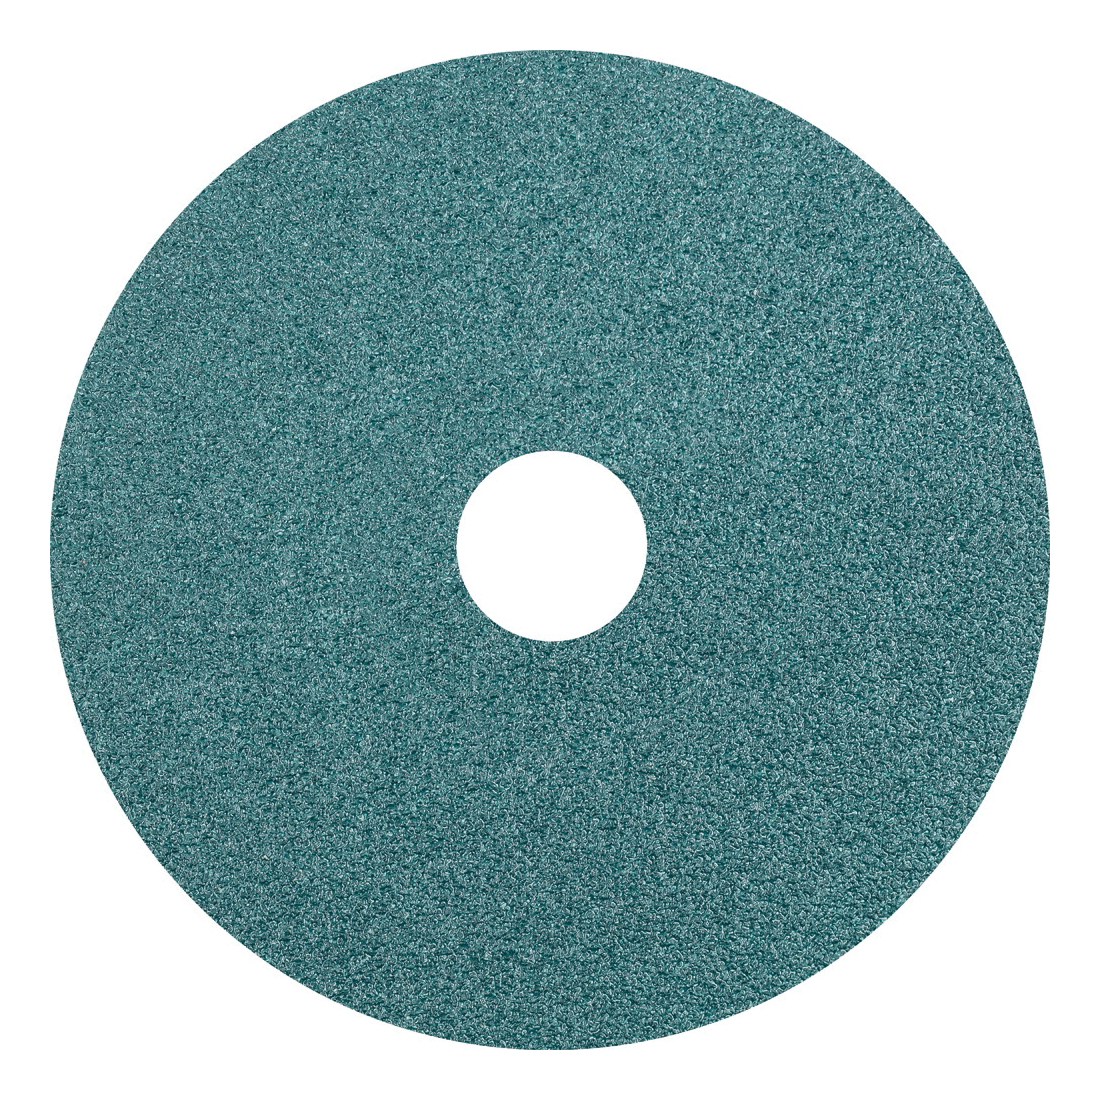 PFERD 62465 Standard Coated Abrasive Disc, 4-1/2 in Dia, 7/8 in Center Hole, 60 Grit, Zirconia Alumina Abrasive, Arbor Attachment